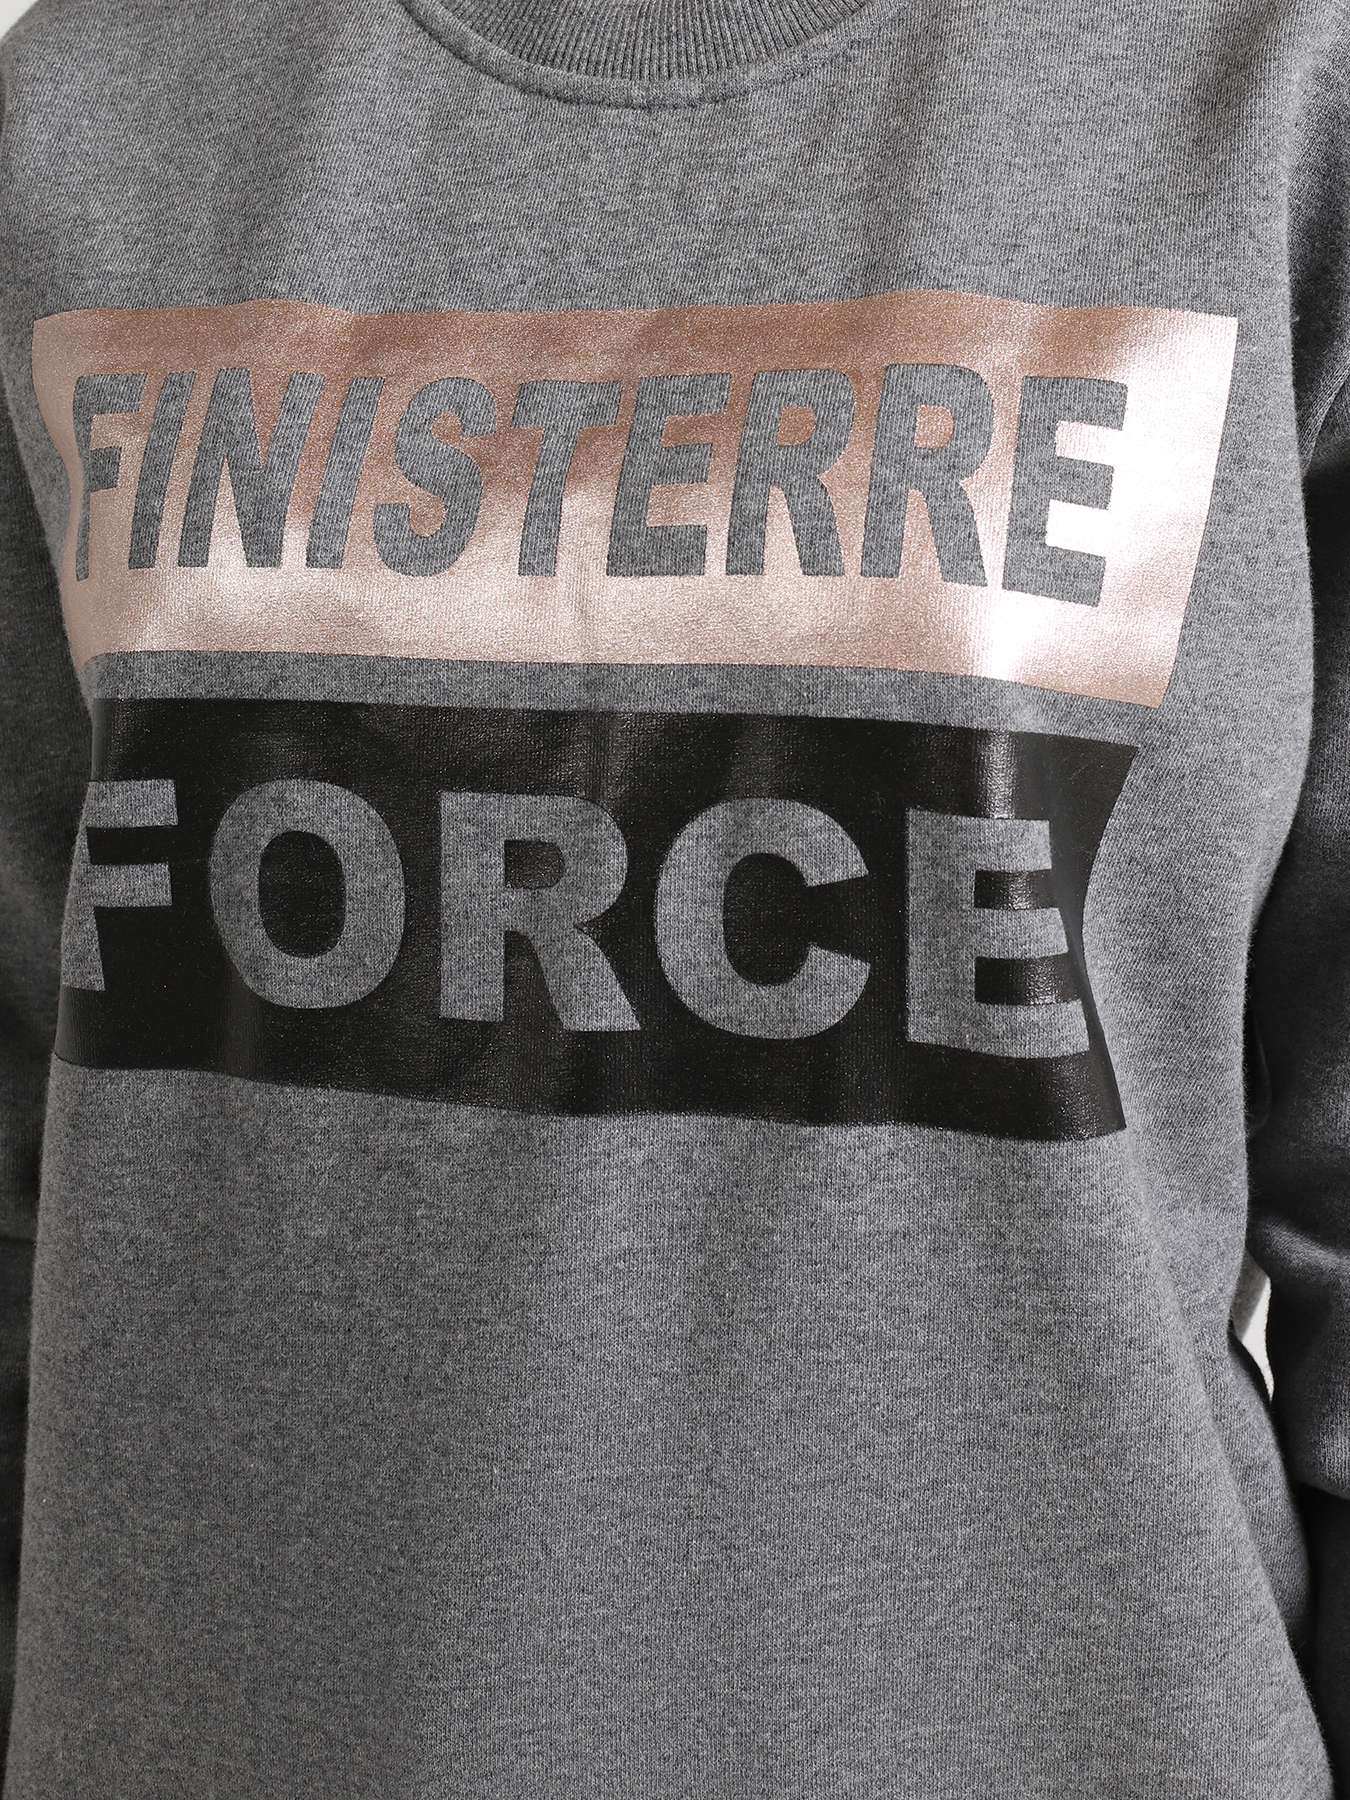 Finisterre Force Женский джемпер 345035-026 Фото 2